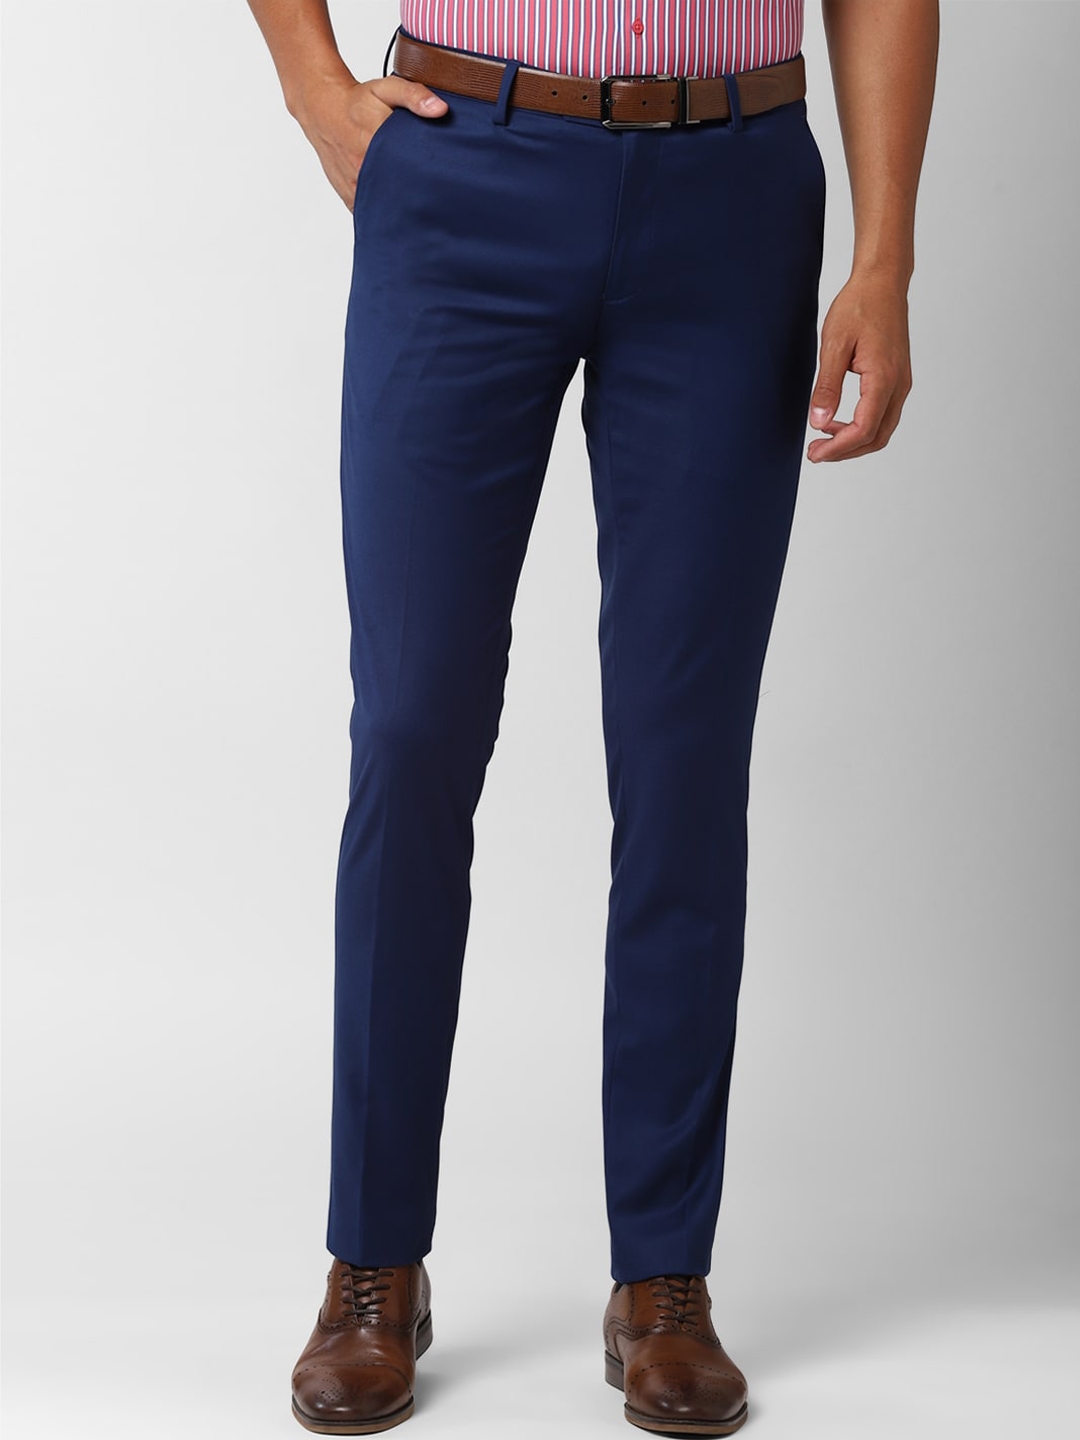 Buy Navy Blue Trousers  Pants for Men by SCOTCH  SODA Online  Ajiocom